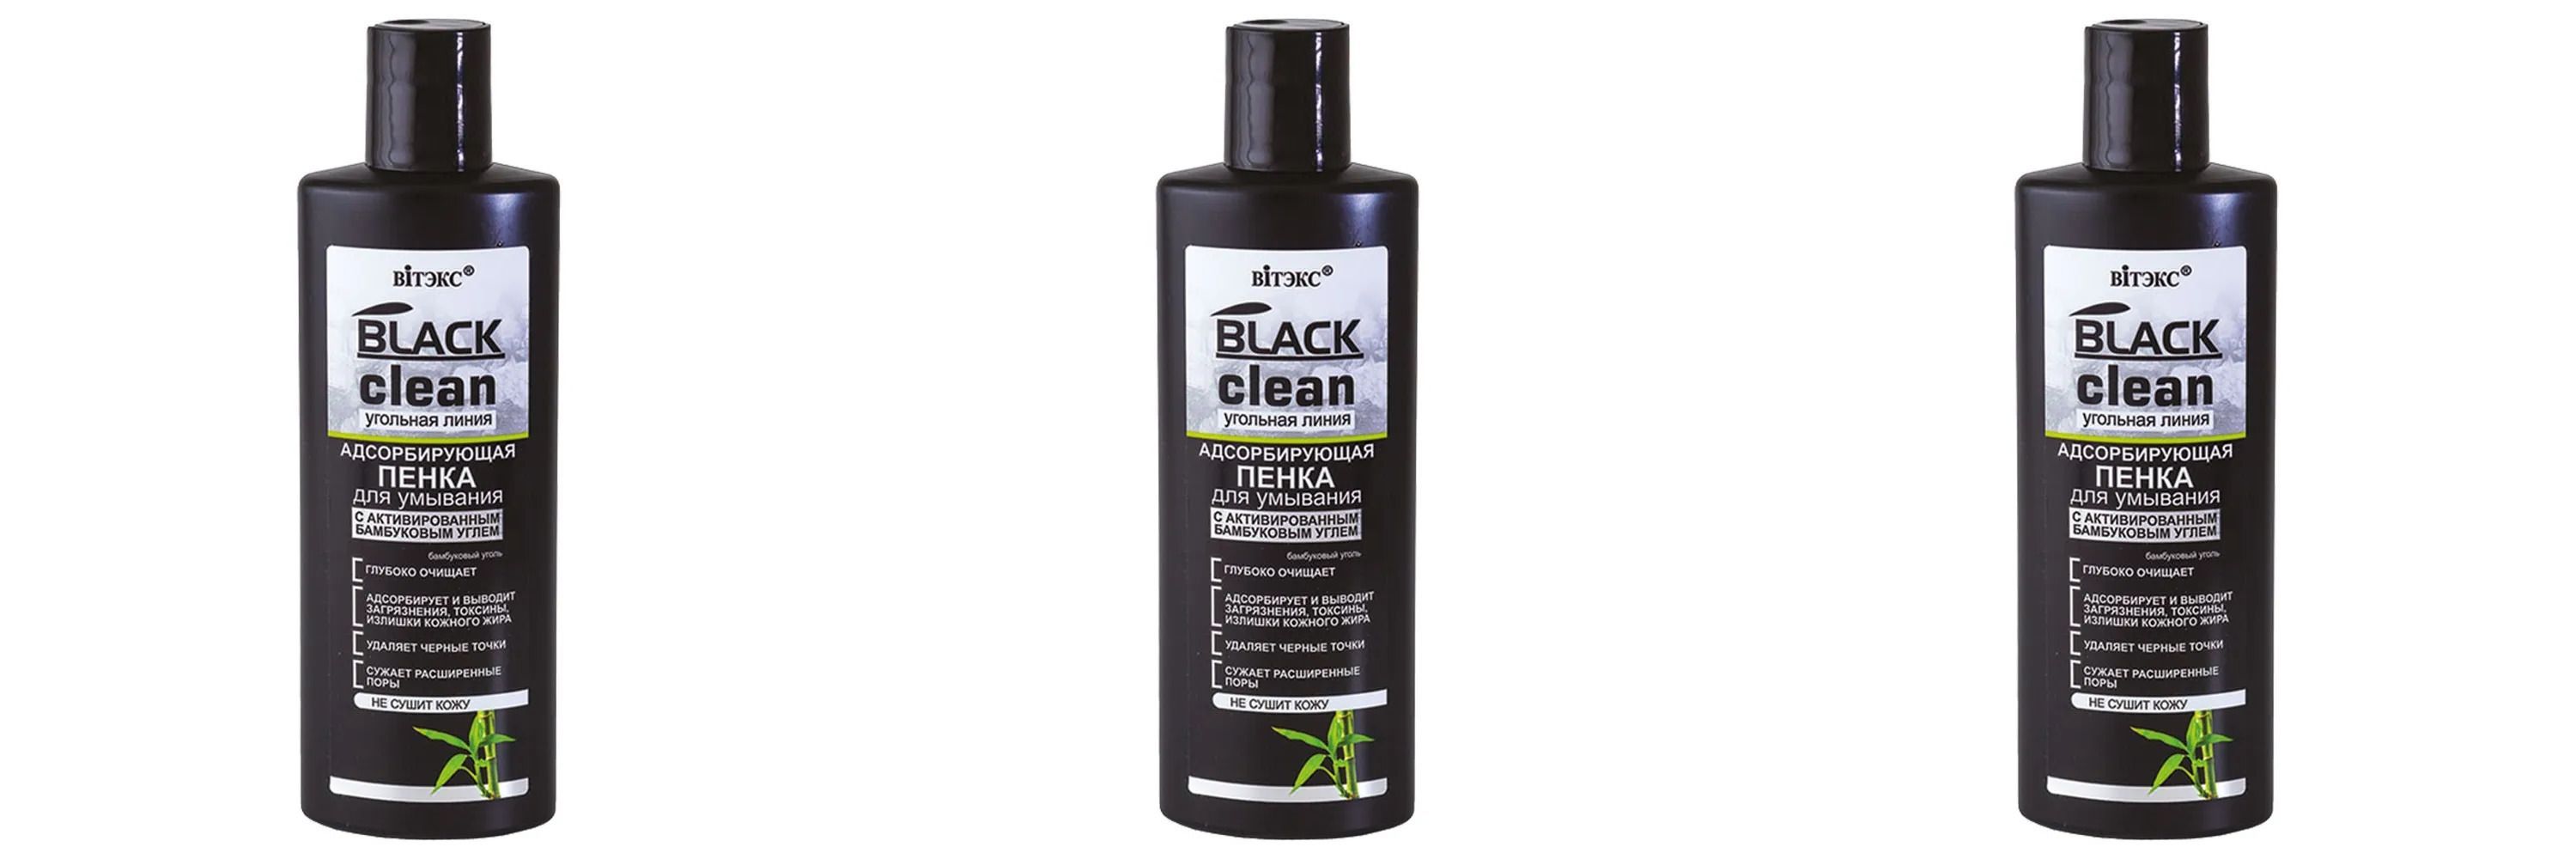 Витэкс BLACK CLEAN ПЕНКА для умывания адсорбирующая,200мл3шт